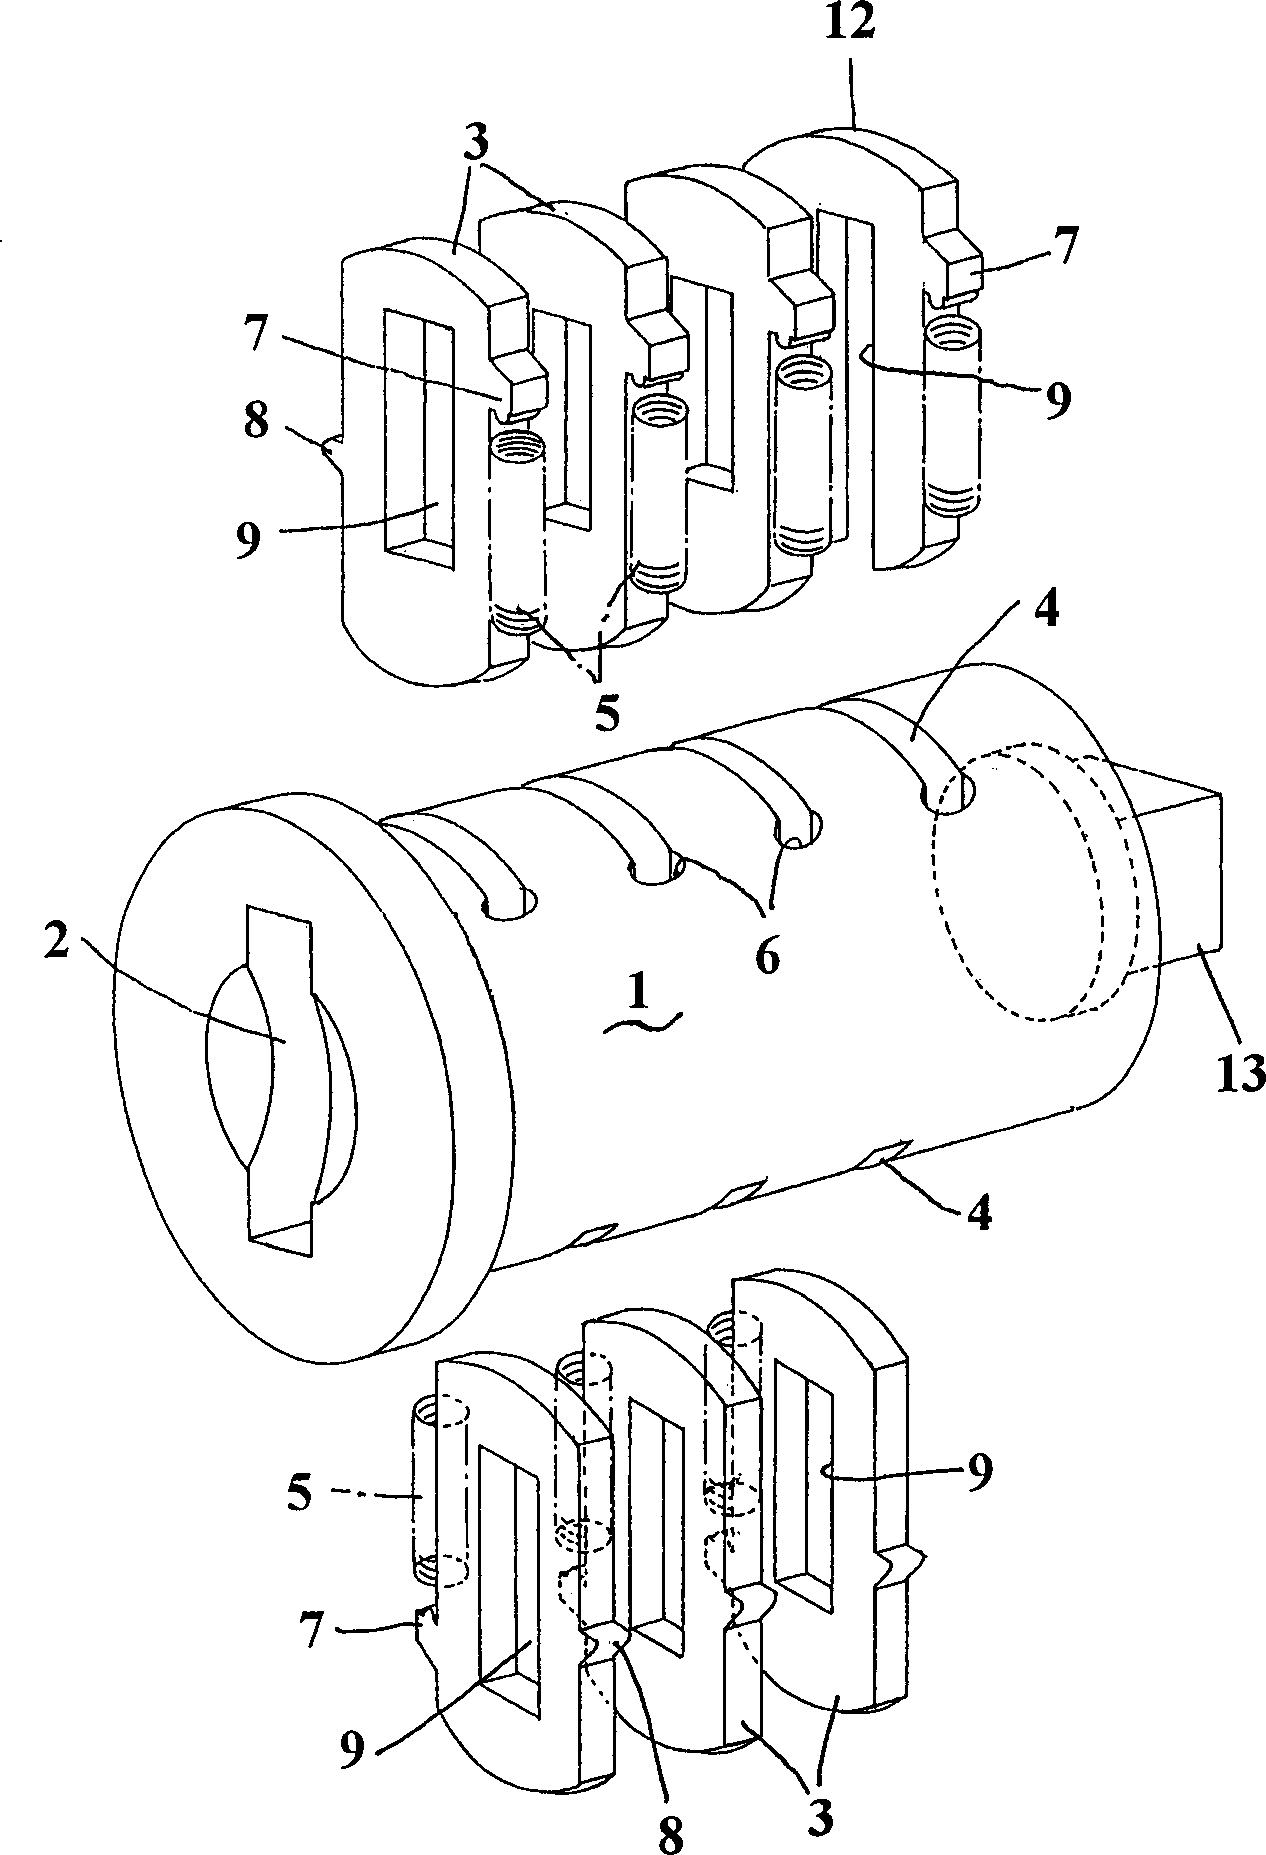 Column-shape locking mechanism